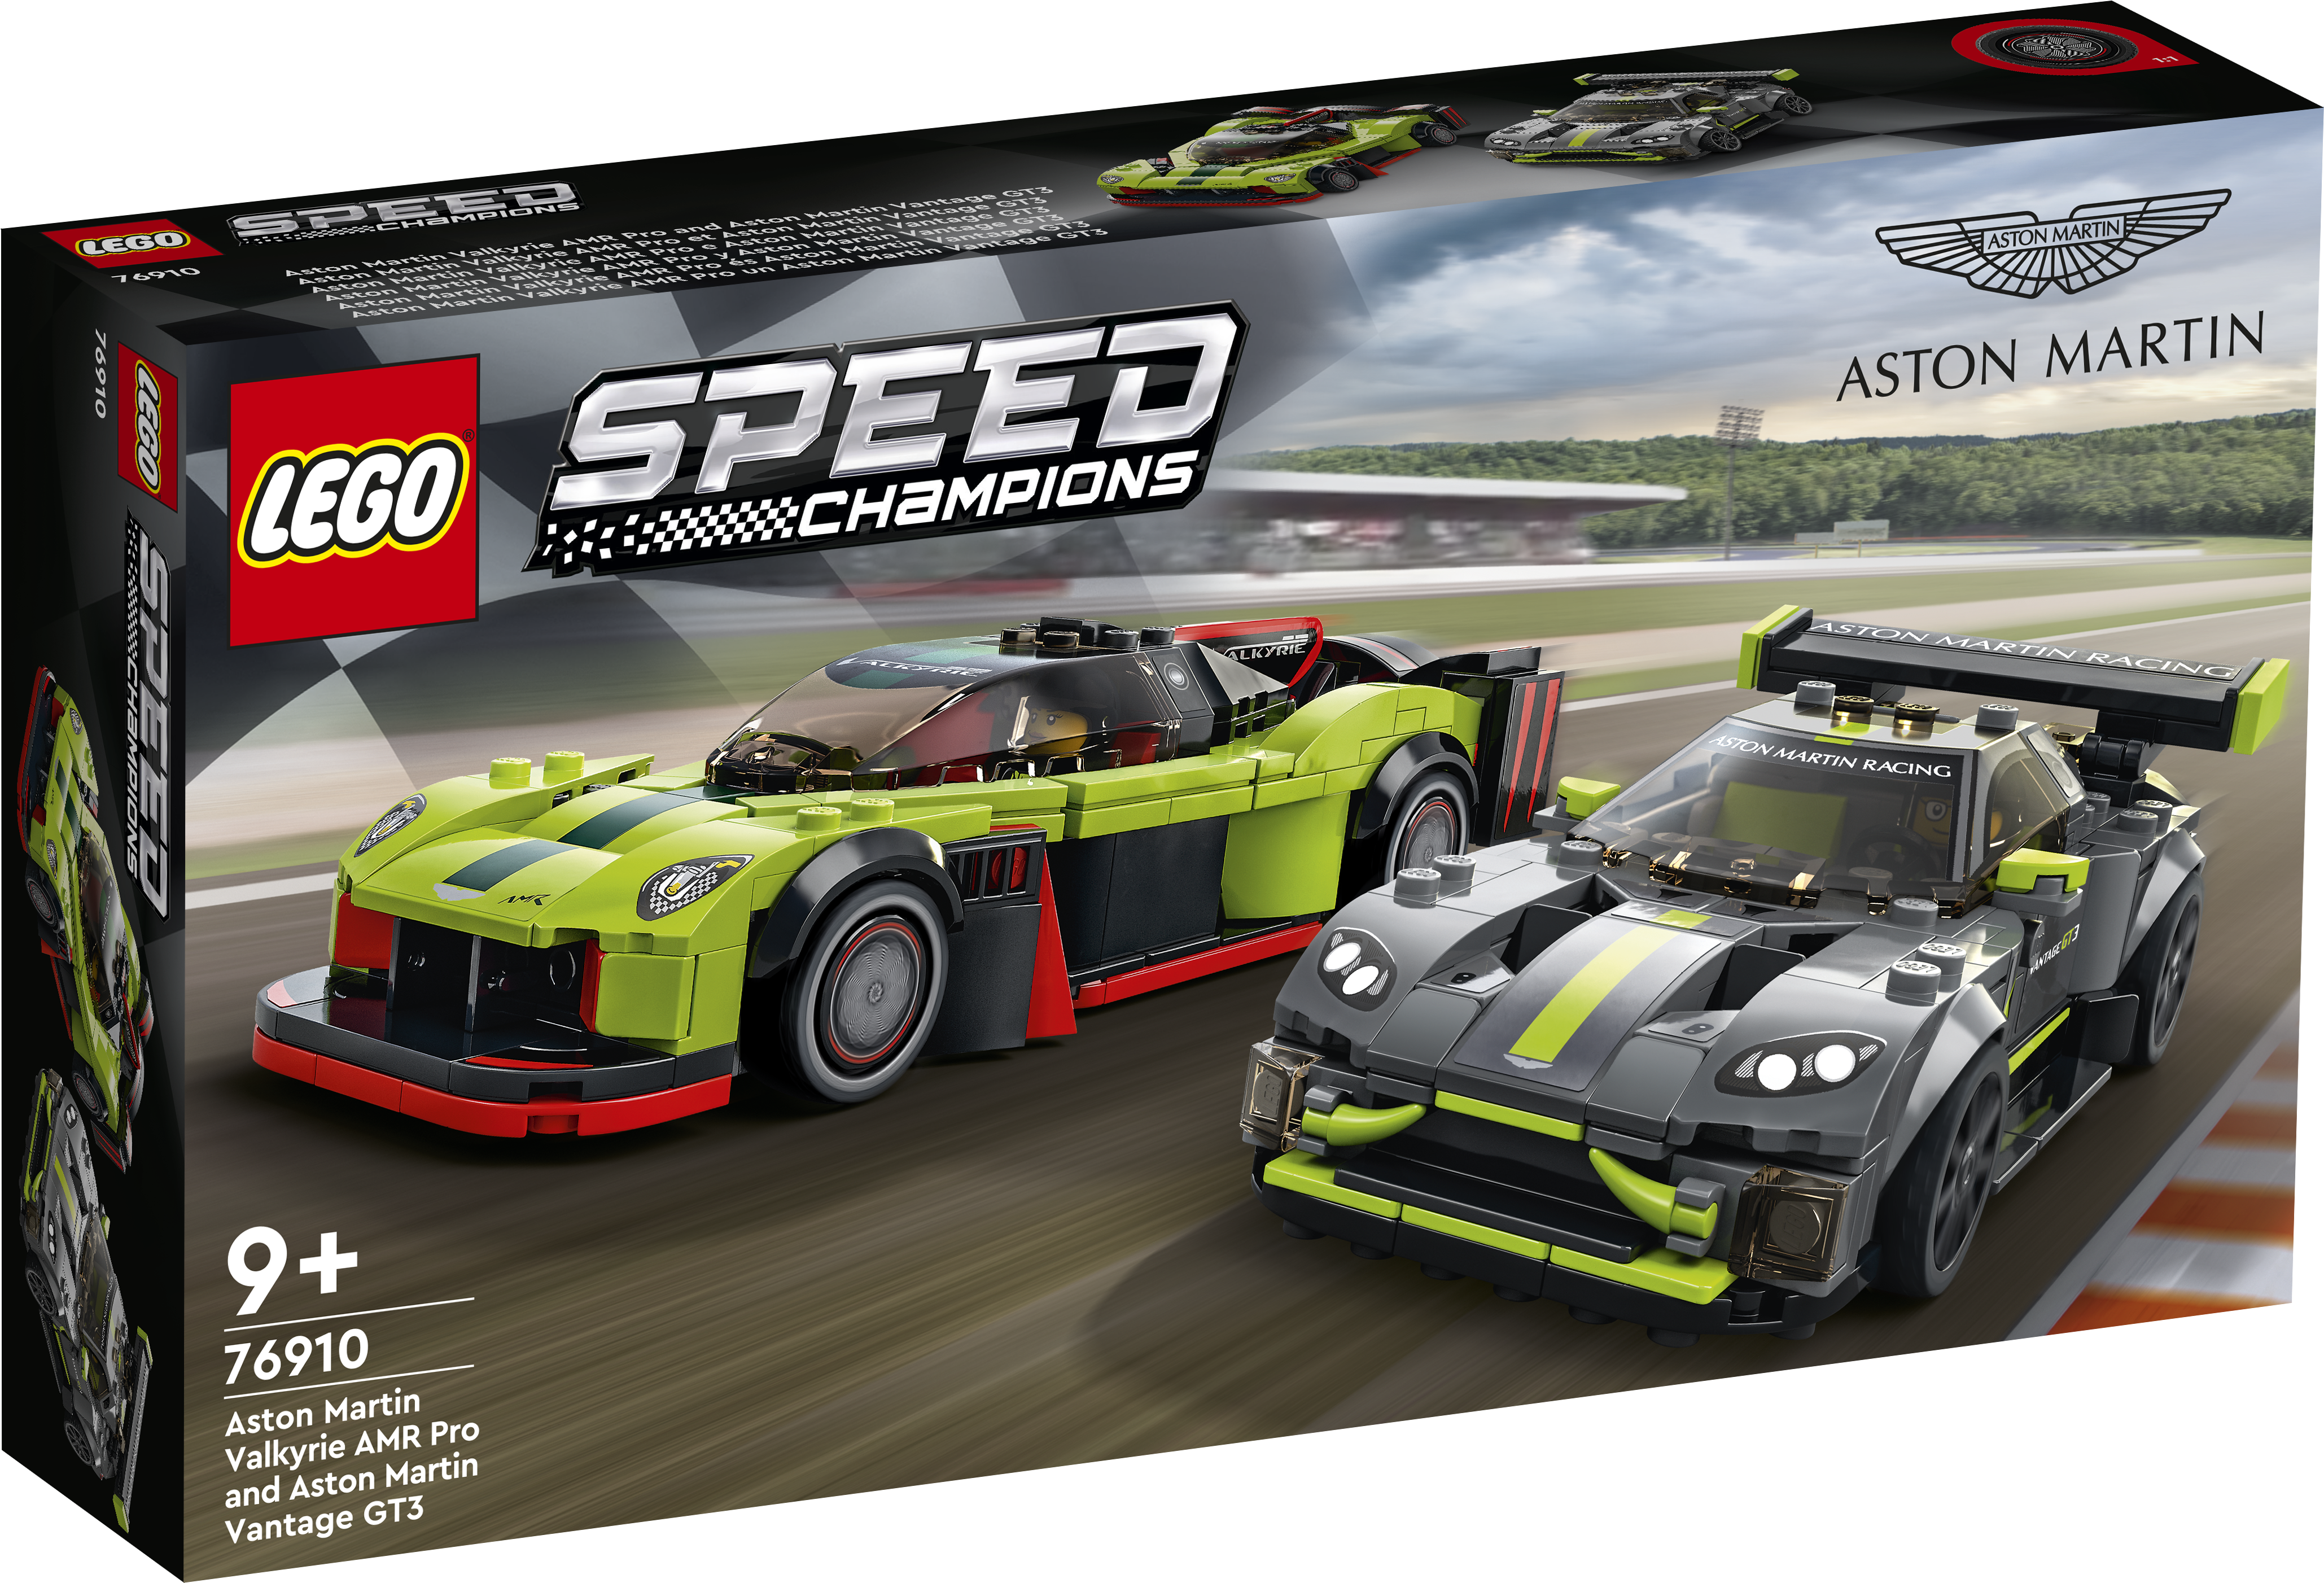 Lego 76910 Aston Martin Valkyrie & Vantage GT3